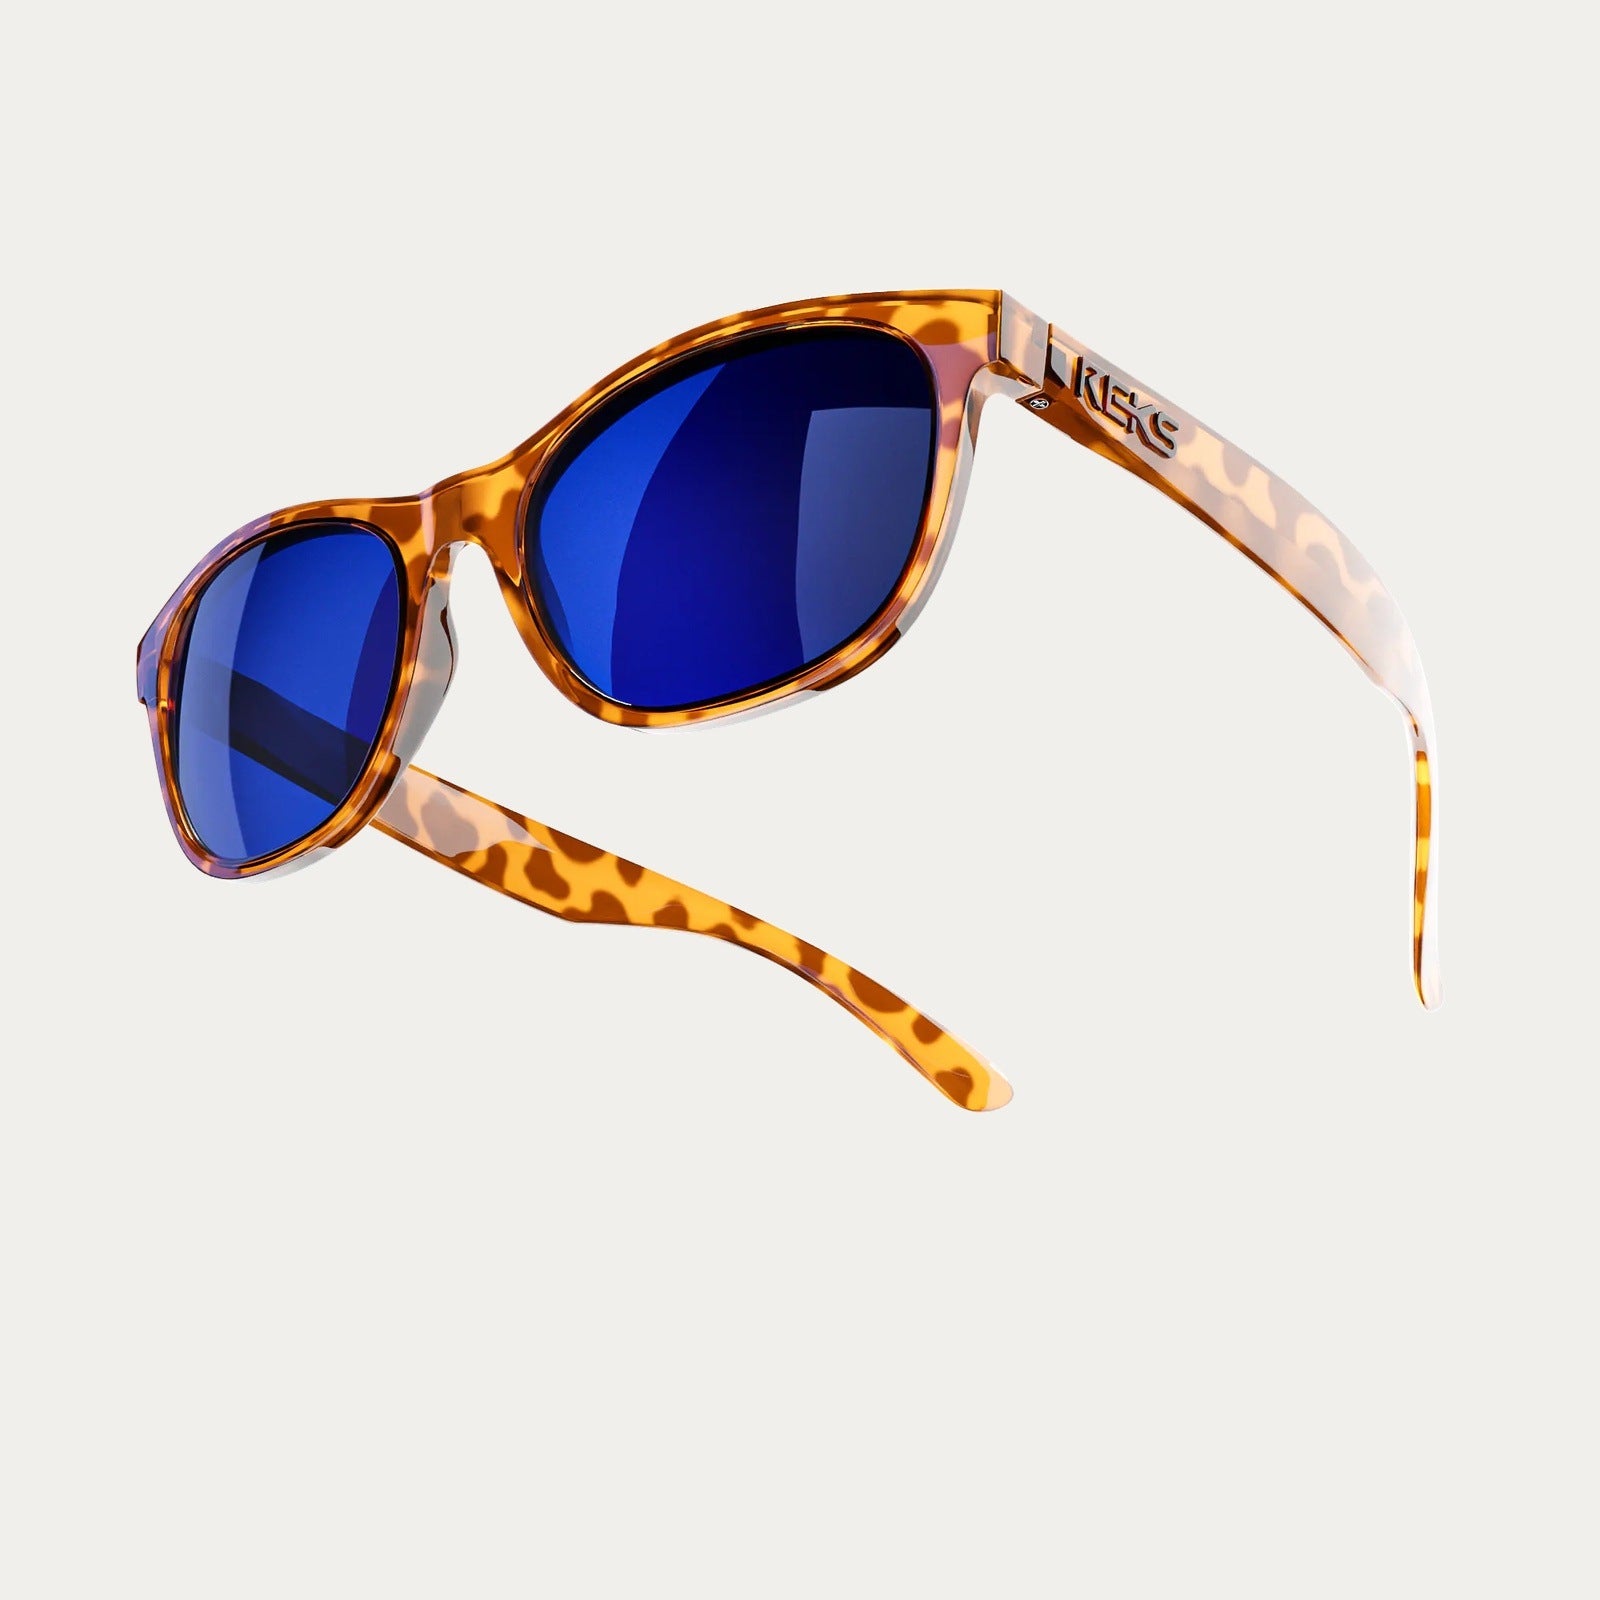 Reks | Sport Trivex Color Boosting Unbreakable Sunglasses Gray Polarized/blue Mirror